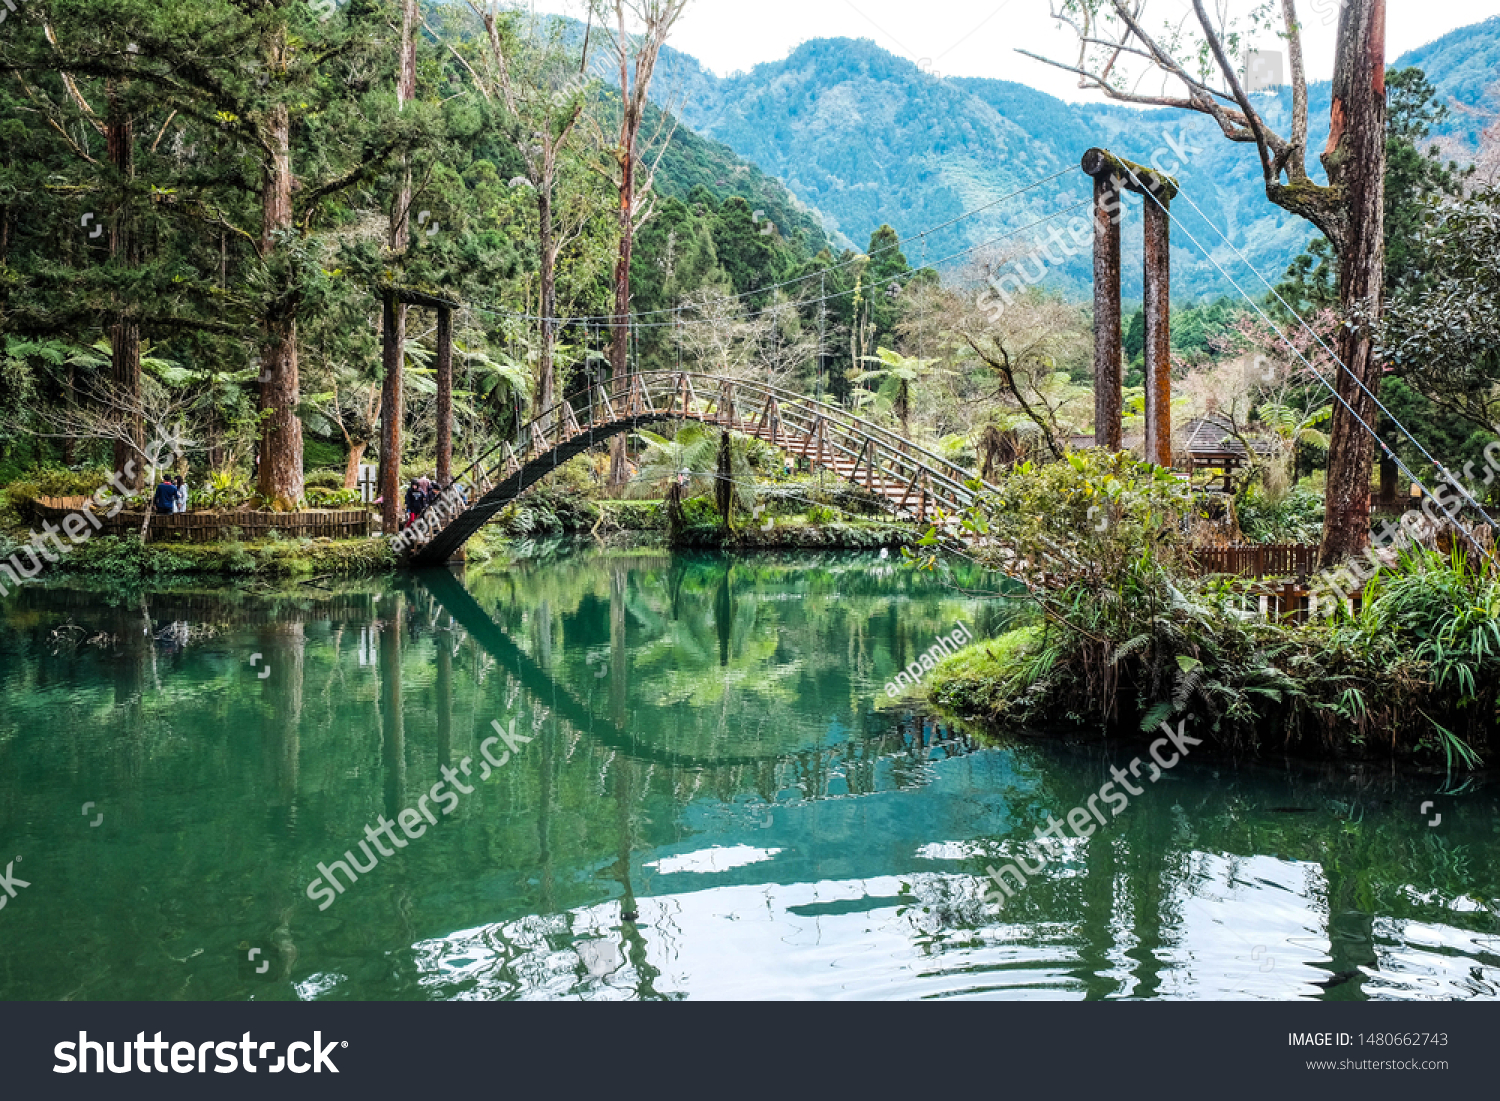 blod høflighed lanthan Xitou nature education area Images, Stock Photos & Vectors | Shutterstock